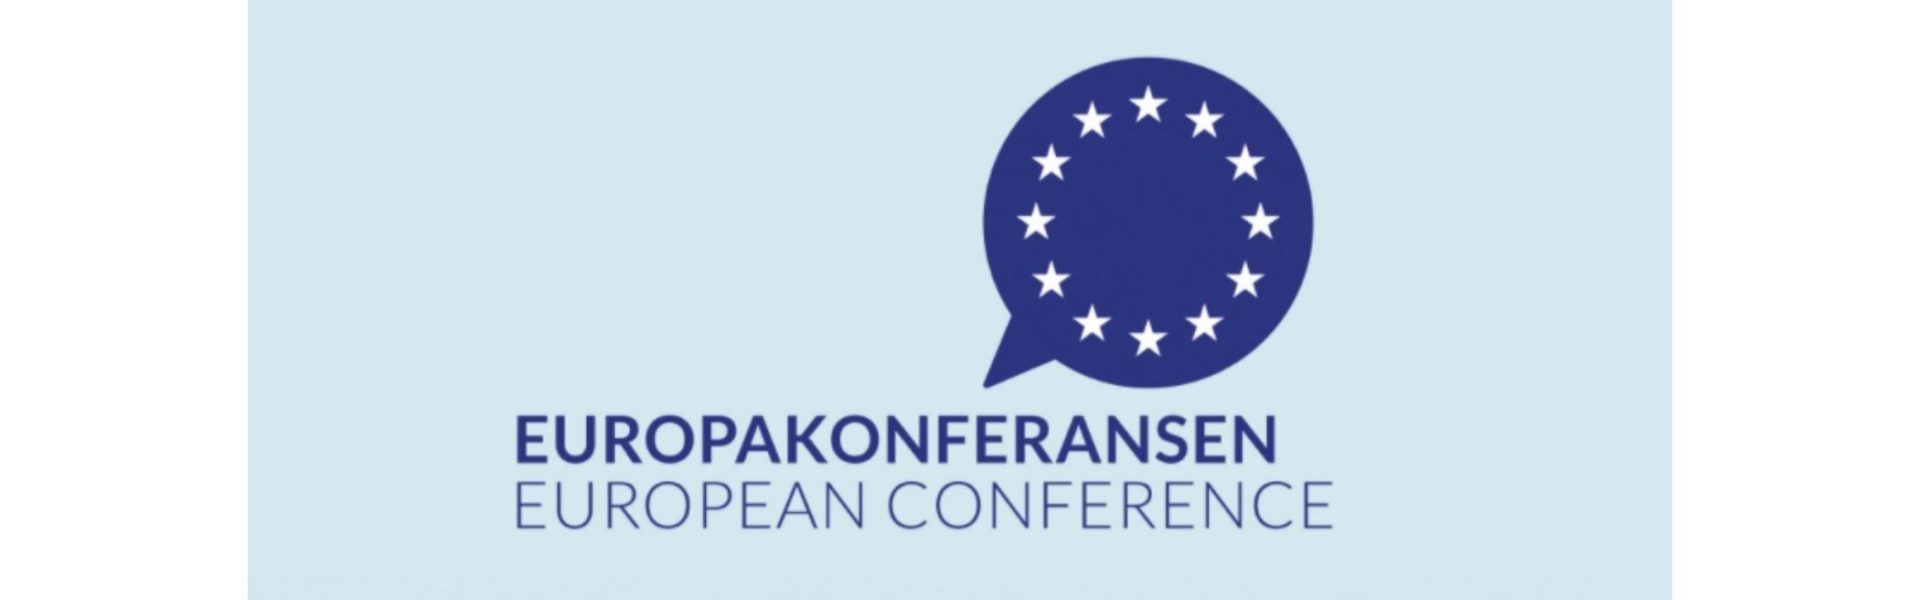 Nettside event Europakonferansen 2022